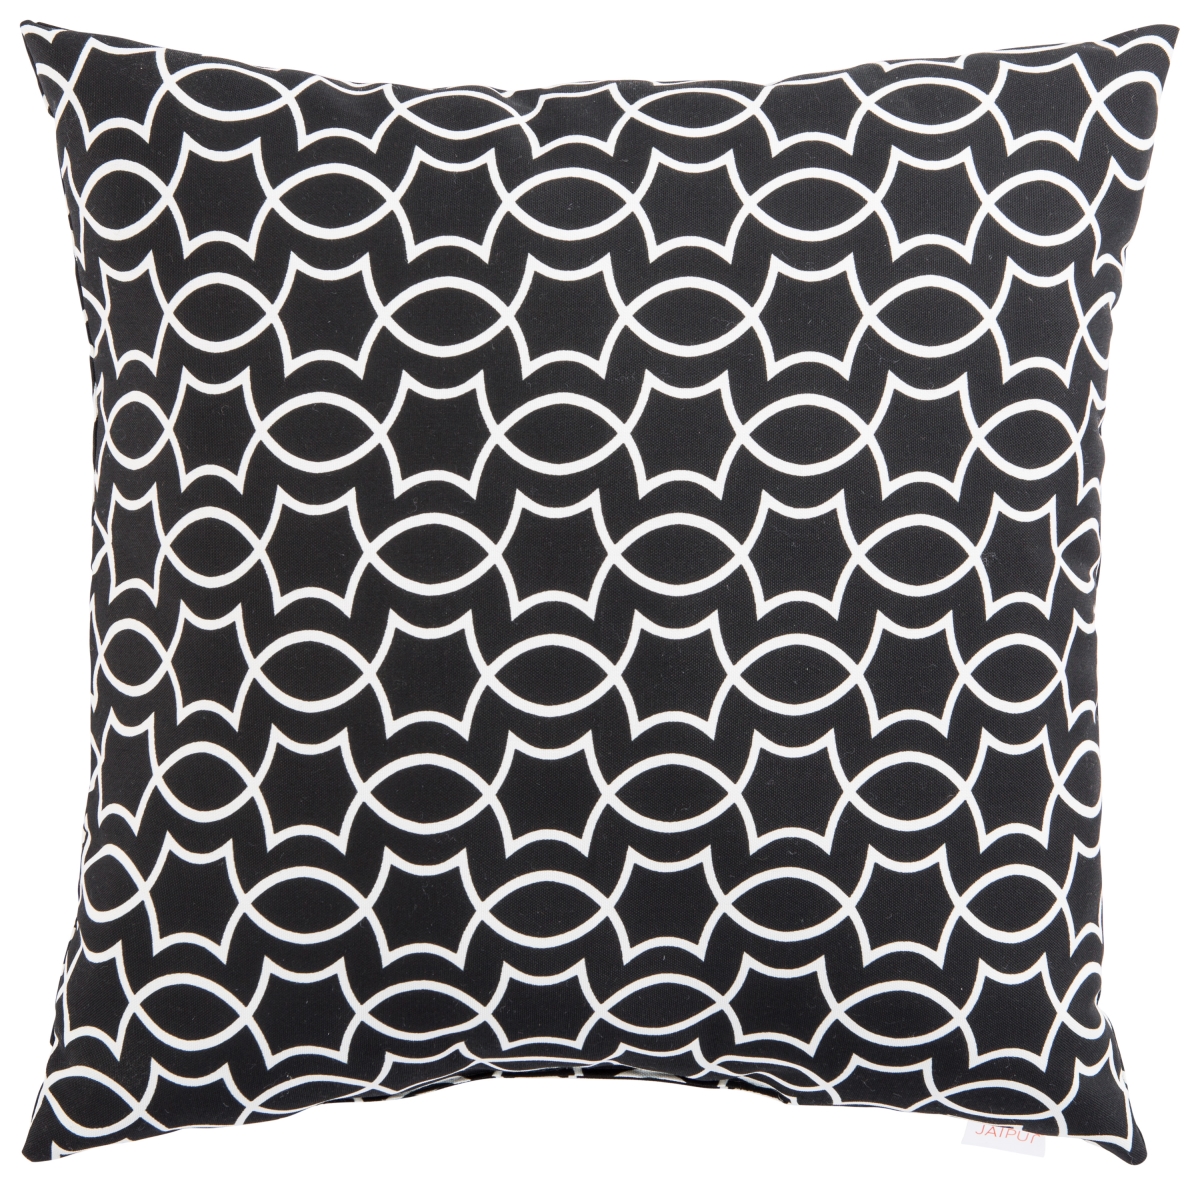 Plp100076 20 X 20 In. Veranda Titan Black & White Geometric Indoor & Outdoor Throw Pillow